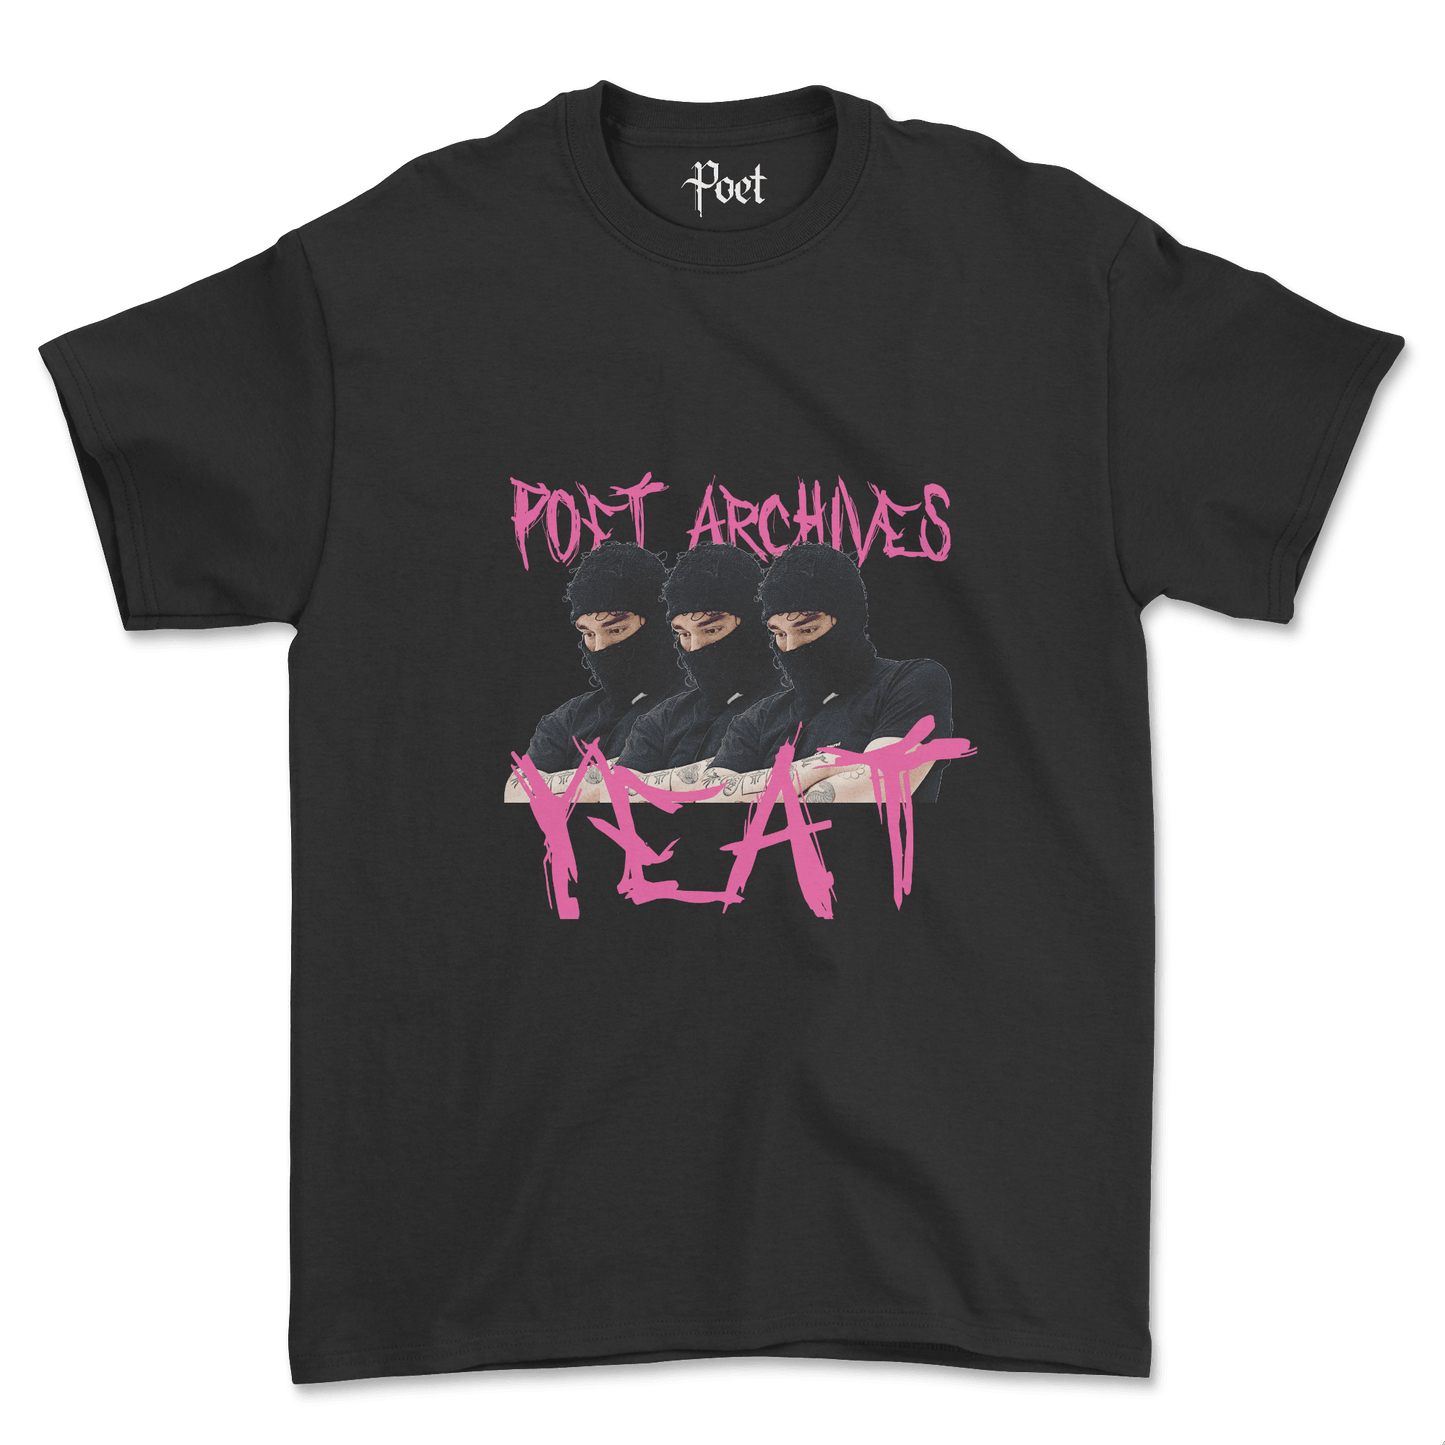 Yëat T-Shirt - Poet Archives